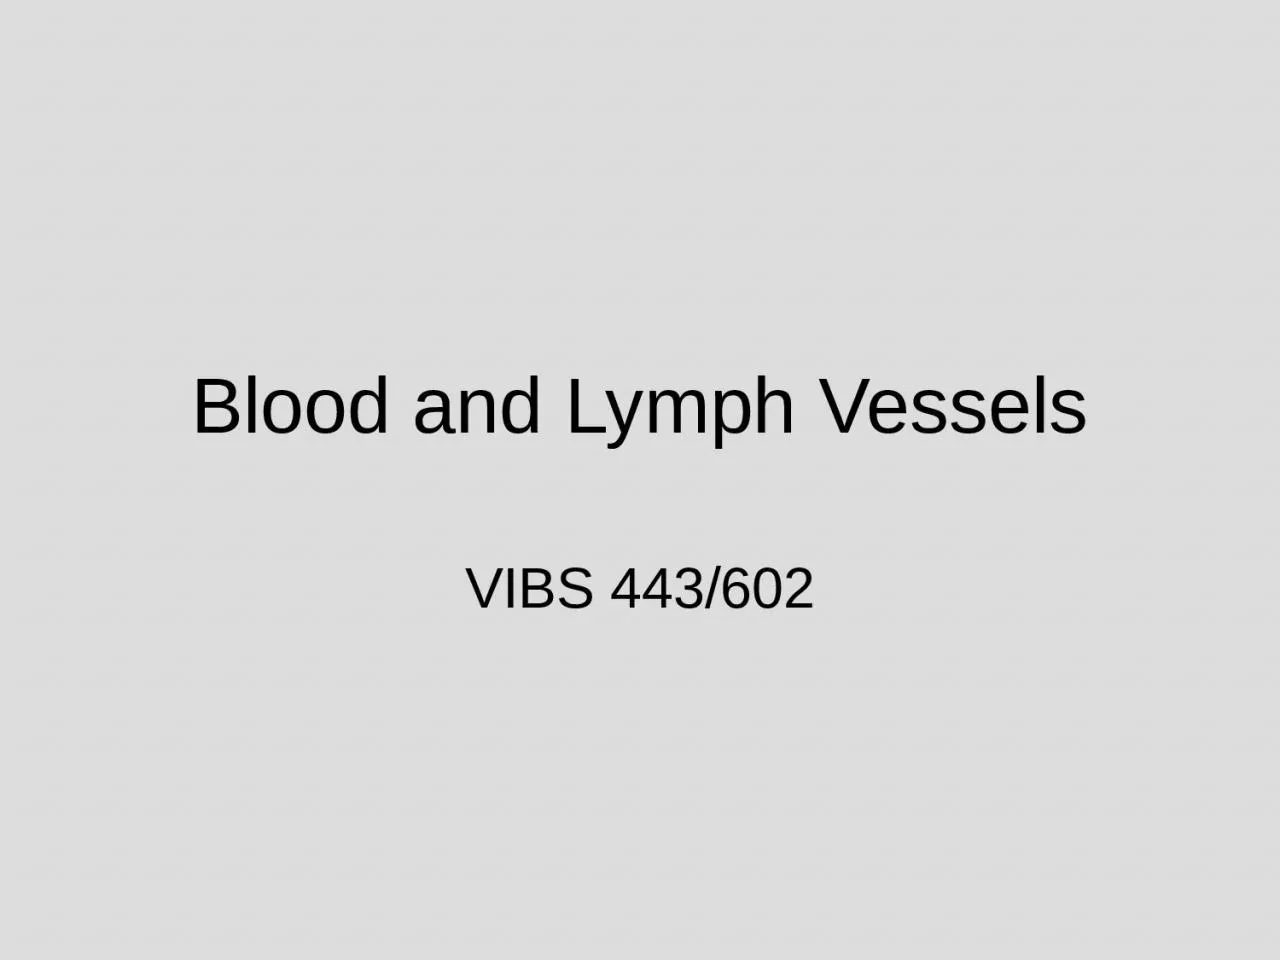 Blood and Lymph Vessels VIBS 443/602